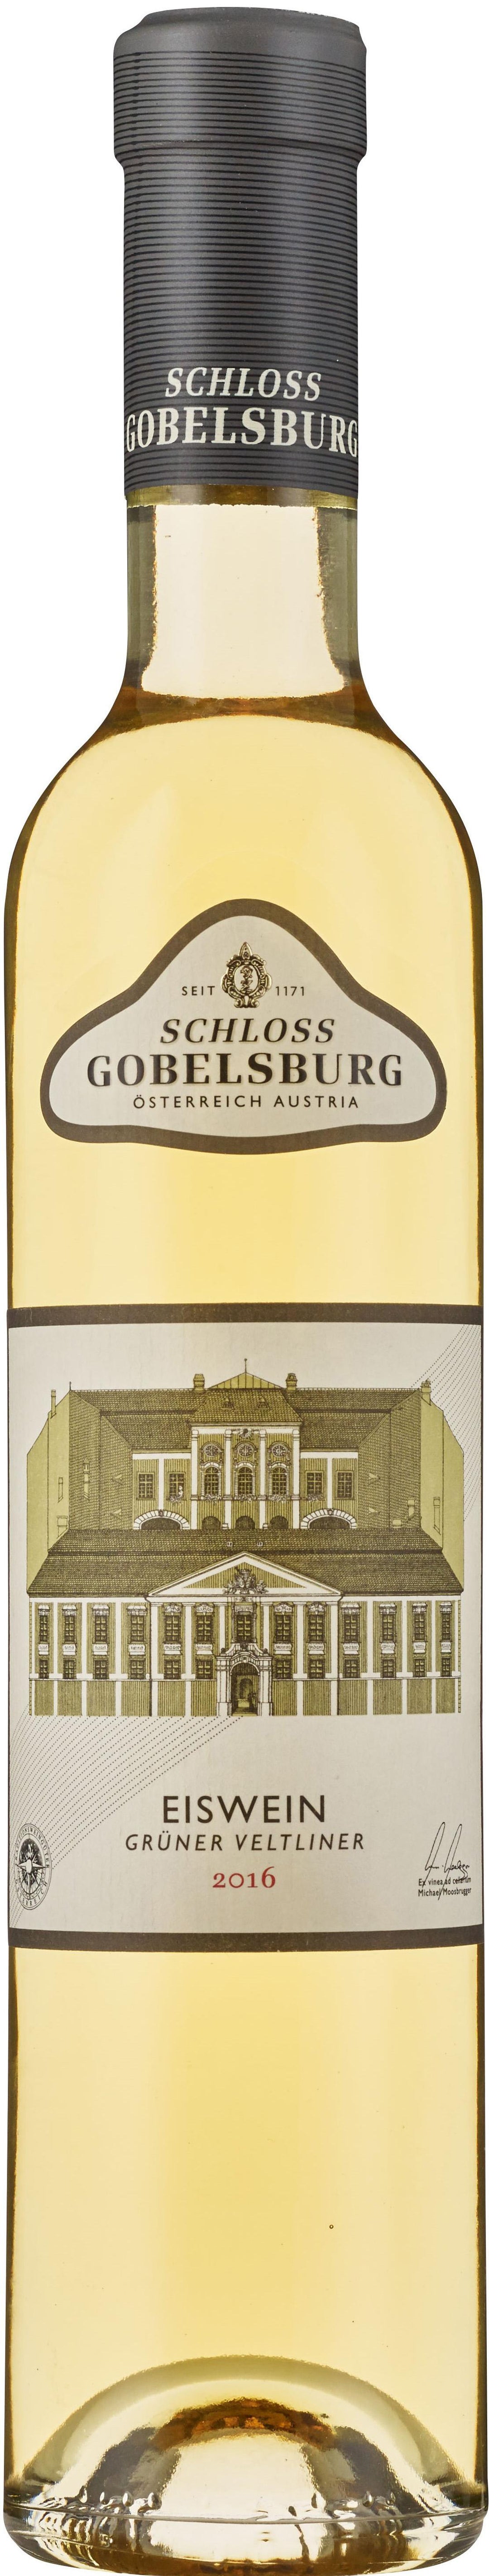 Eiswein Gruner Veltliner, Schloss Gobelsburg